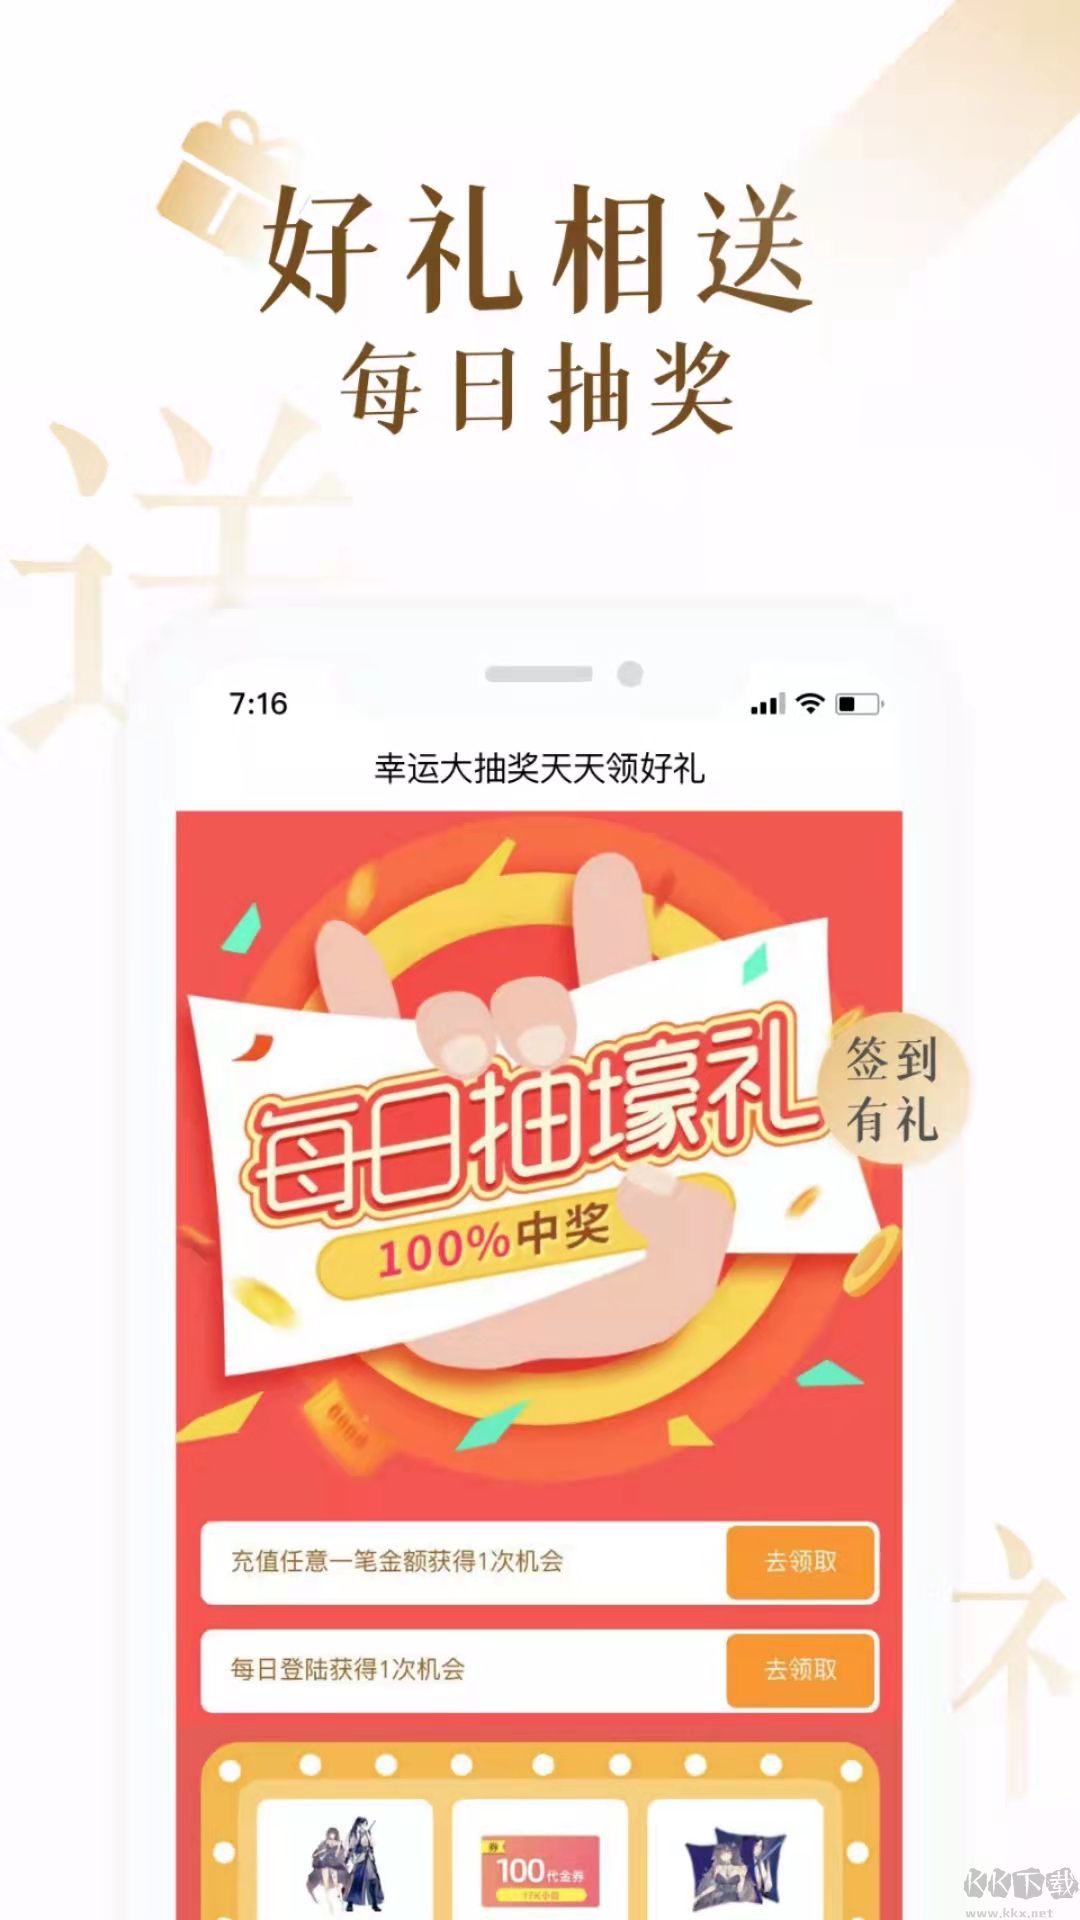 17K小说app(修改免费)2023最新